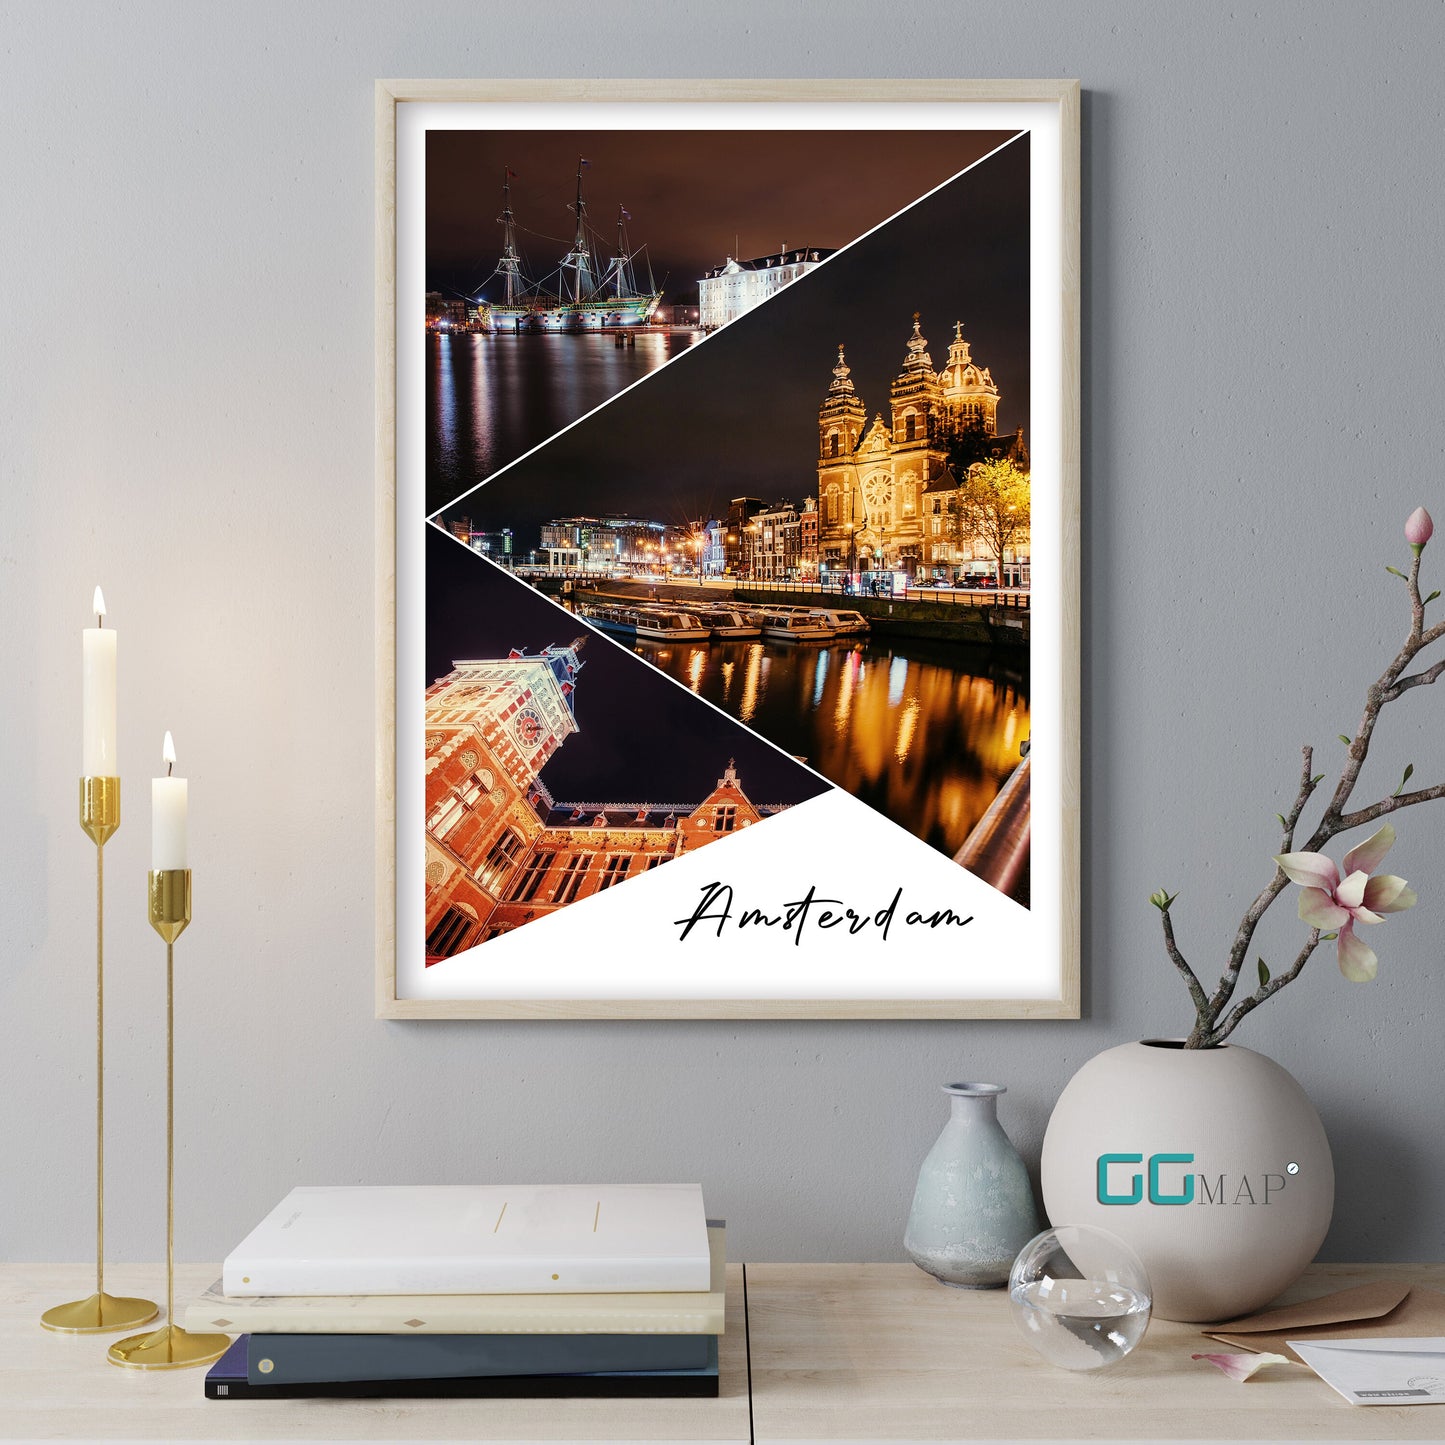 AMSTERDAM Story - Amsterdam poster - Wall art - Home decor - Digital Print